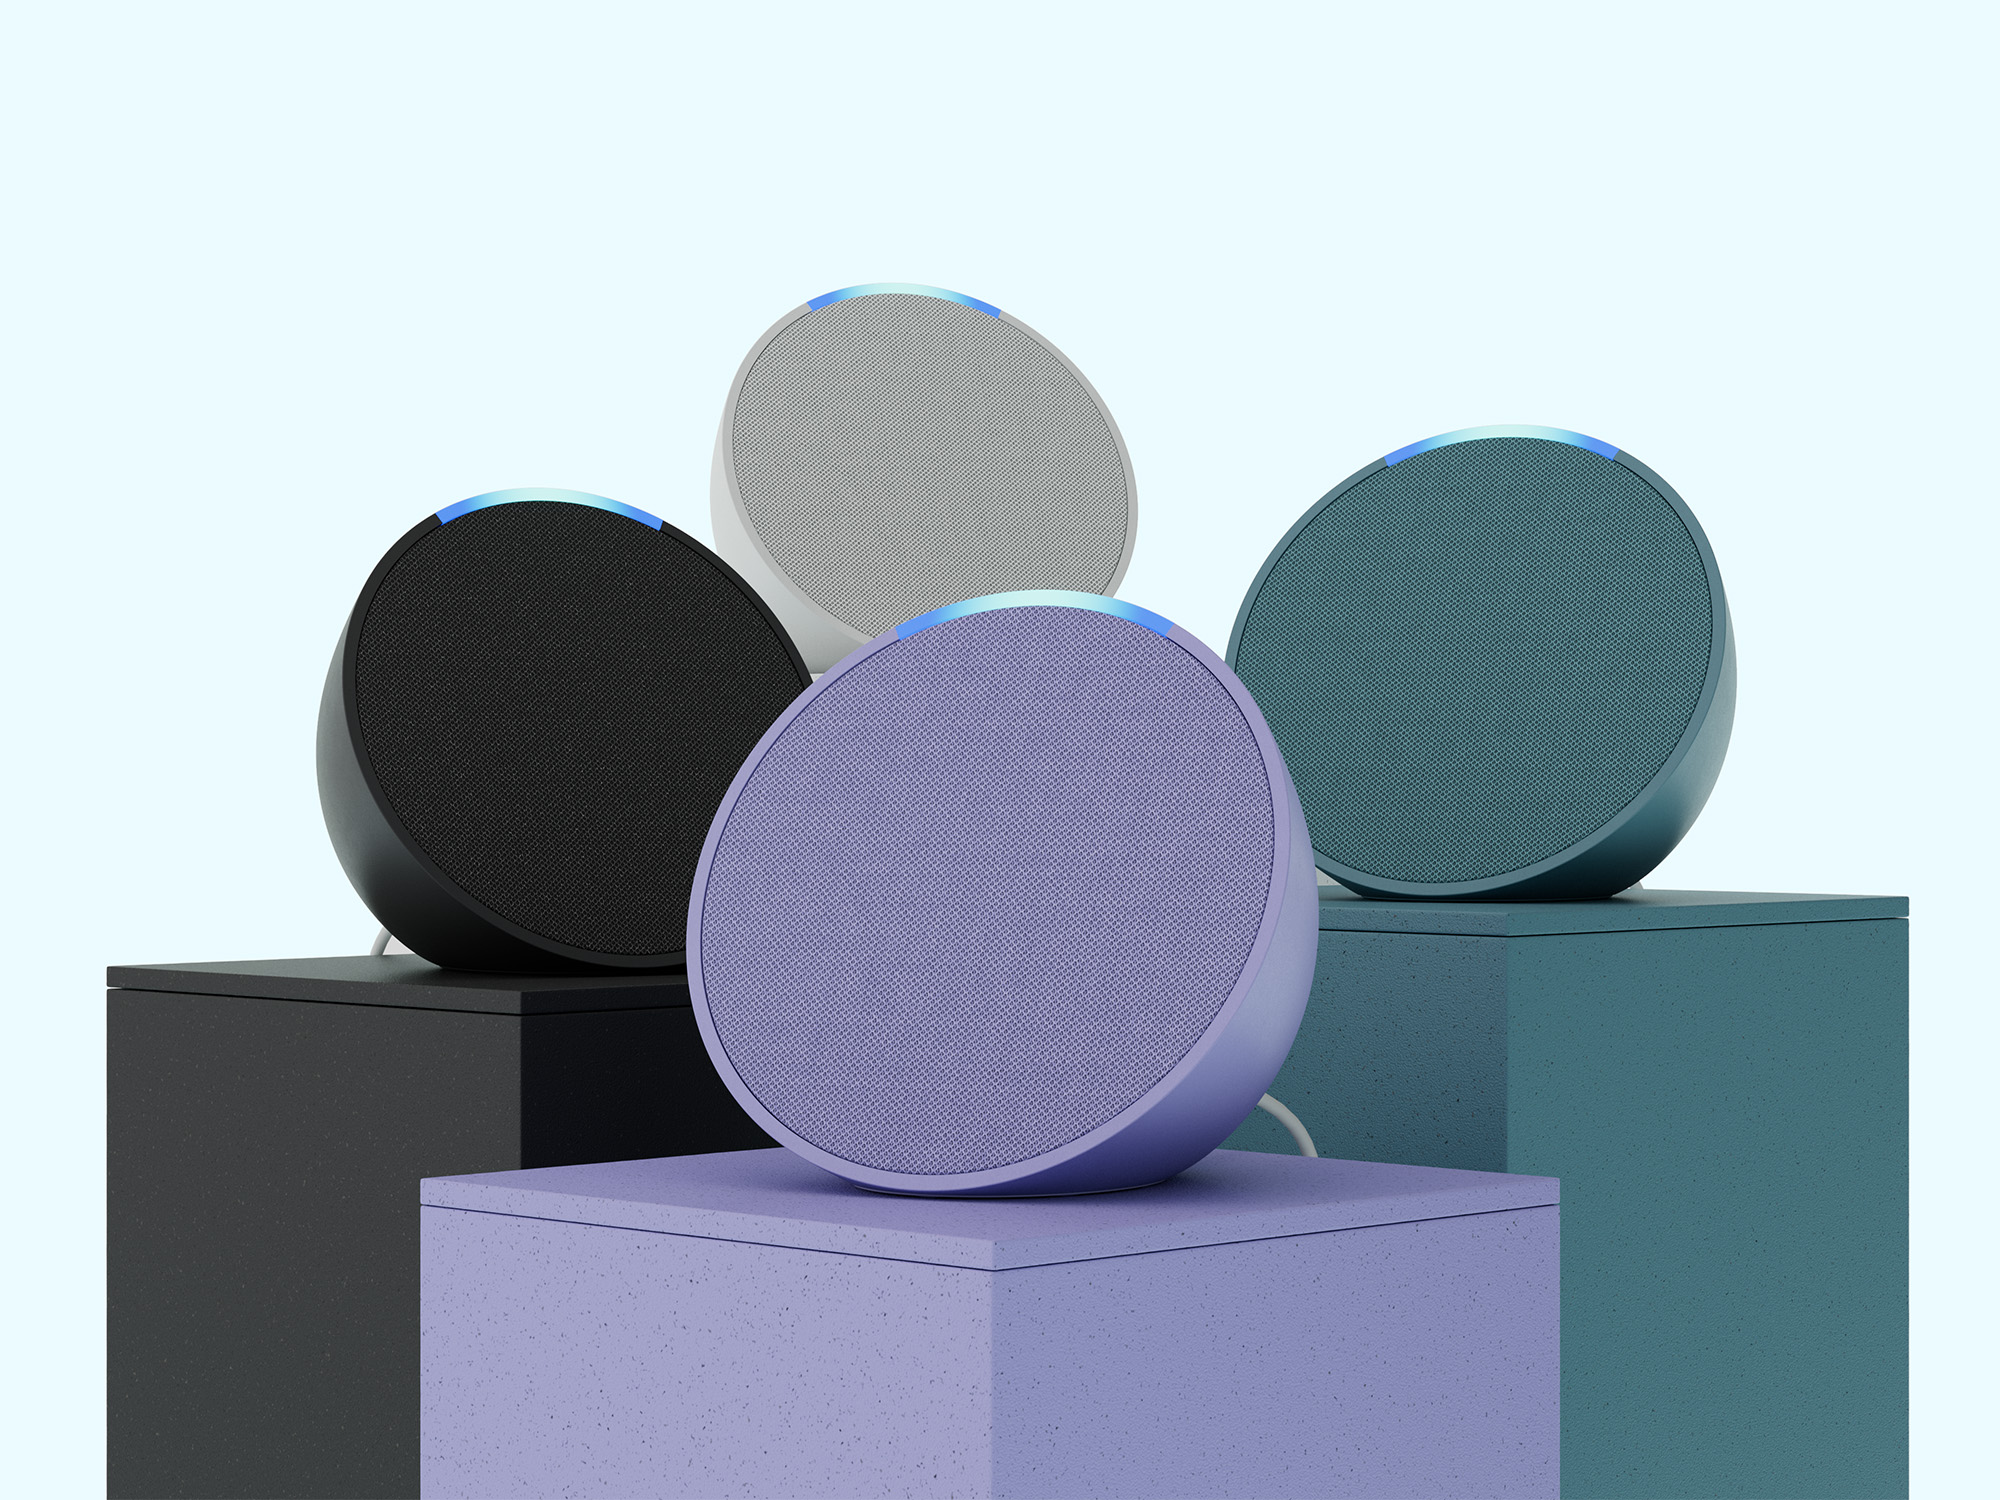 Amazon Echo Pop in four colors.